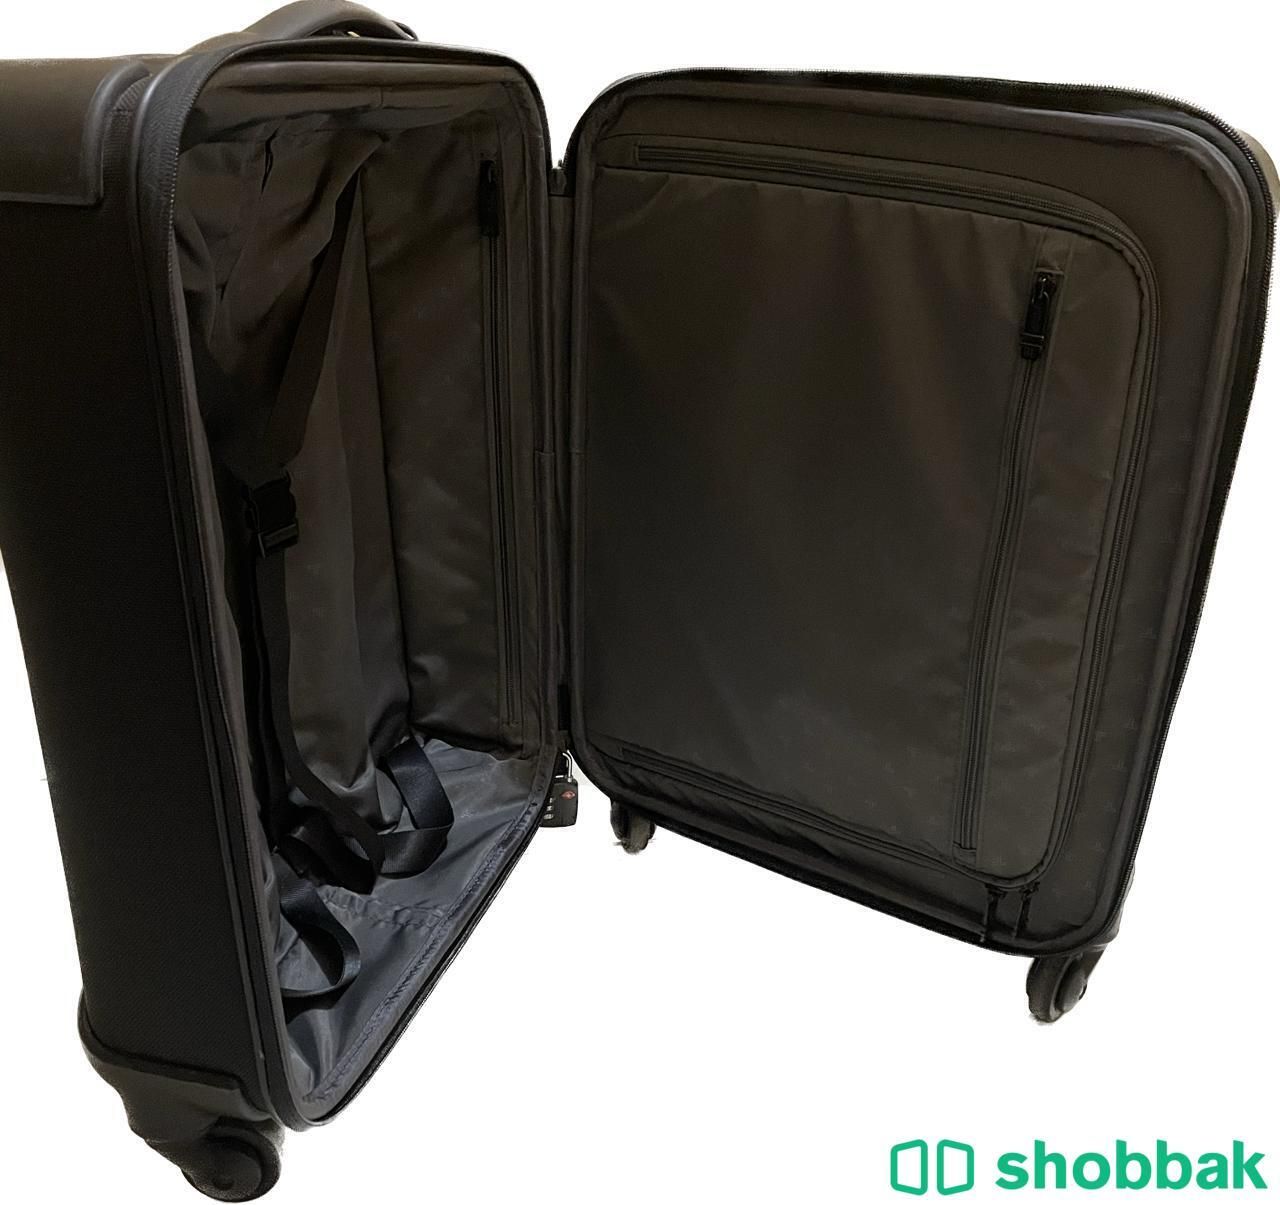 حقيبة سفر تومي Tumi Carry-on bag Shobbak Saudi Arabia